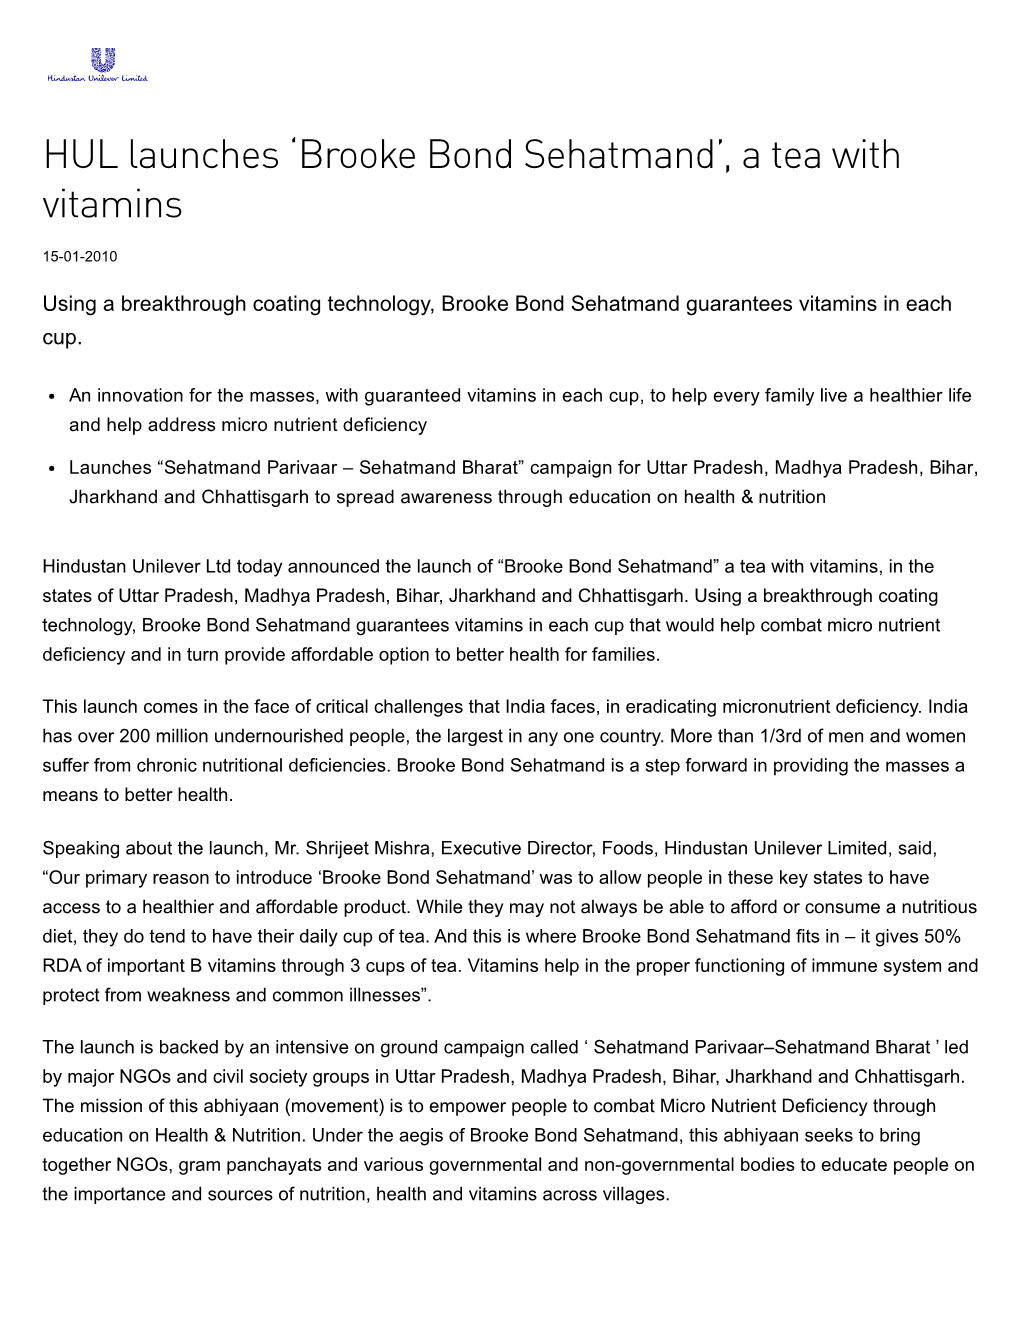 'Brooke Bond Sehatmand', a Tea with Vitamins